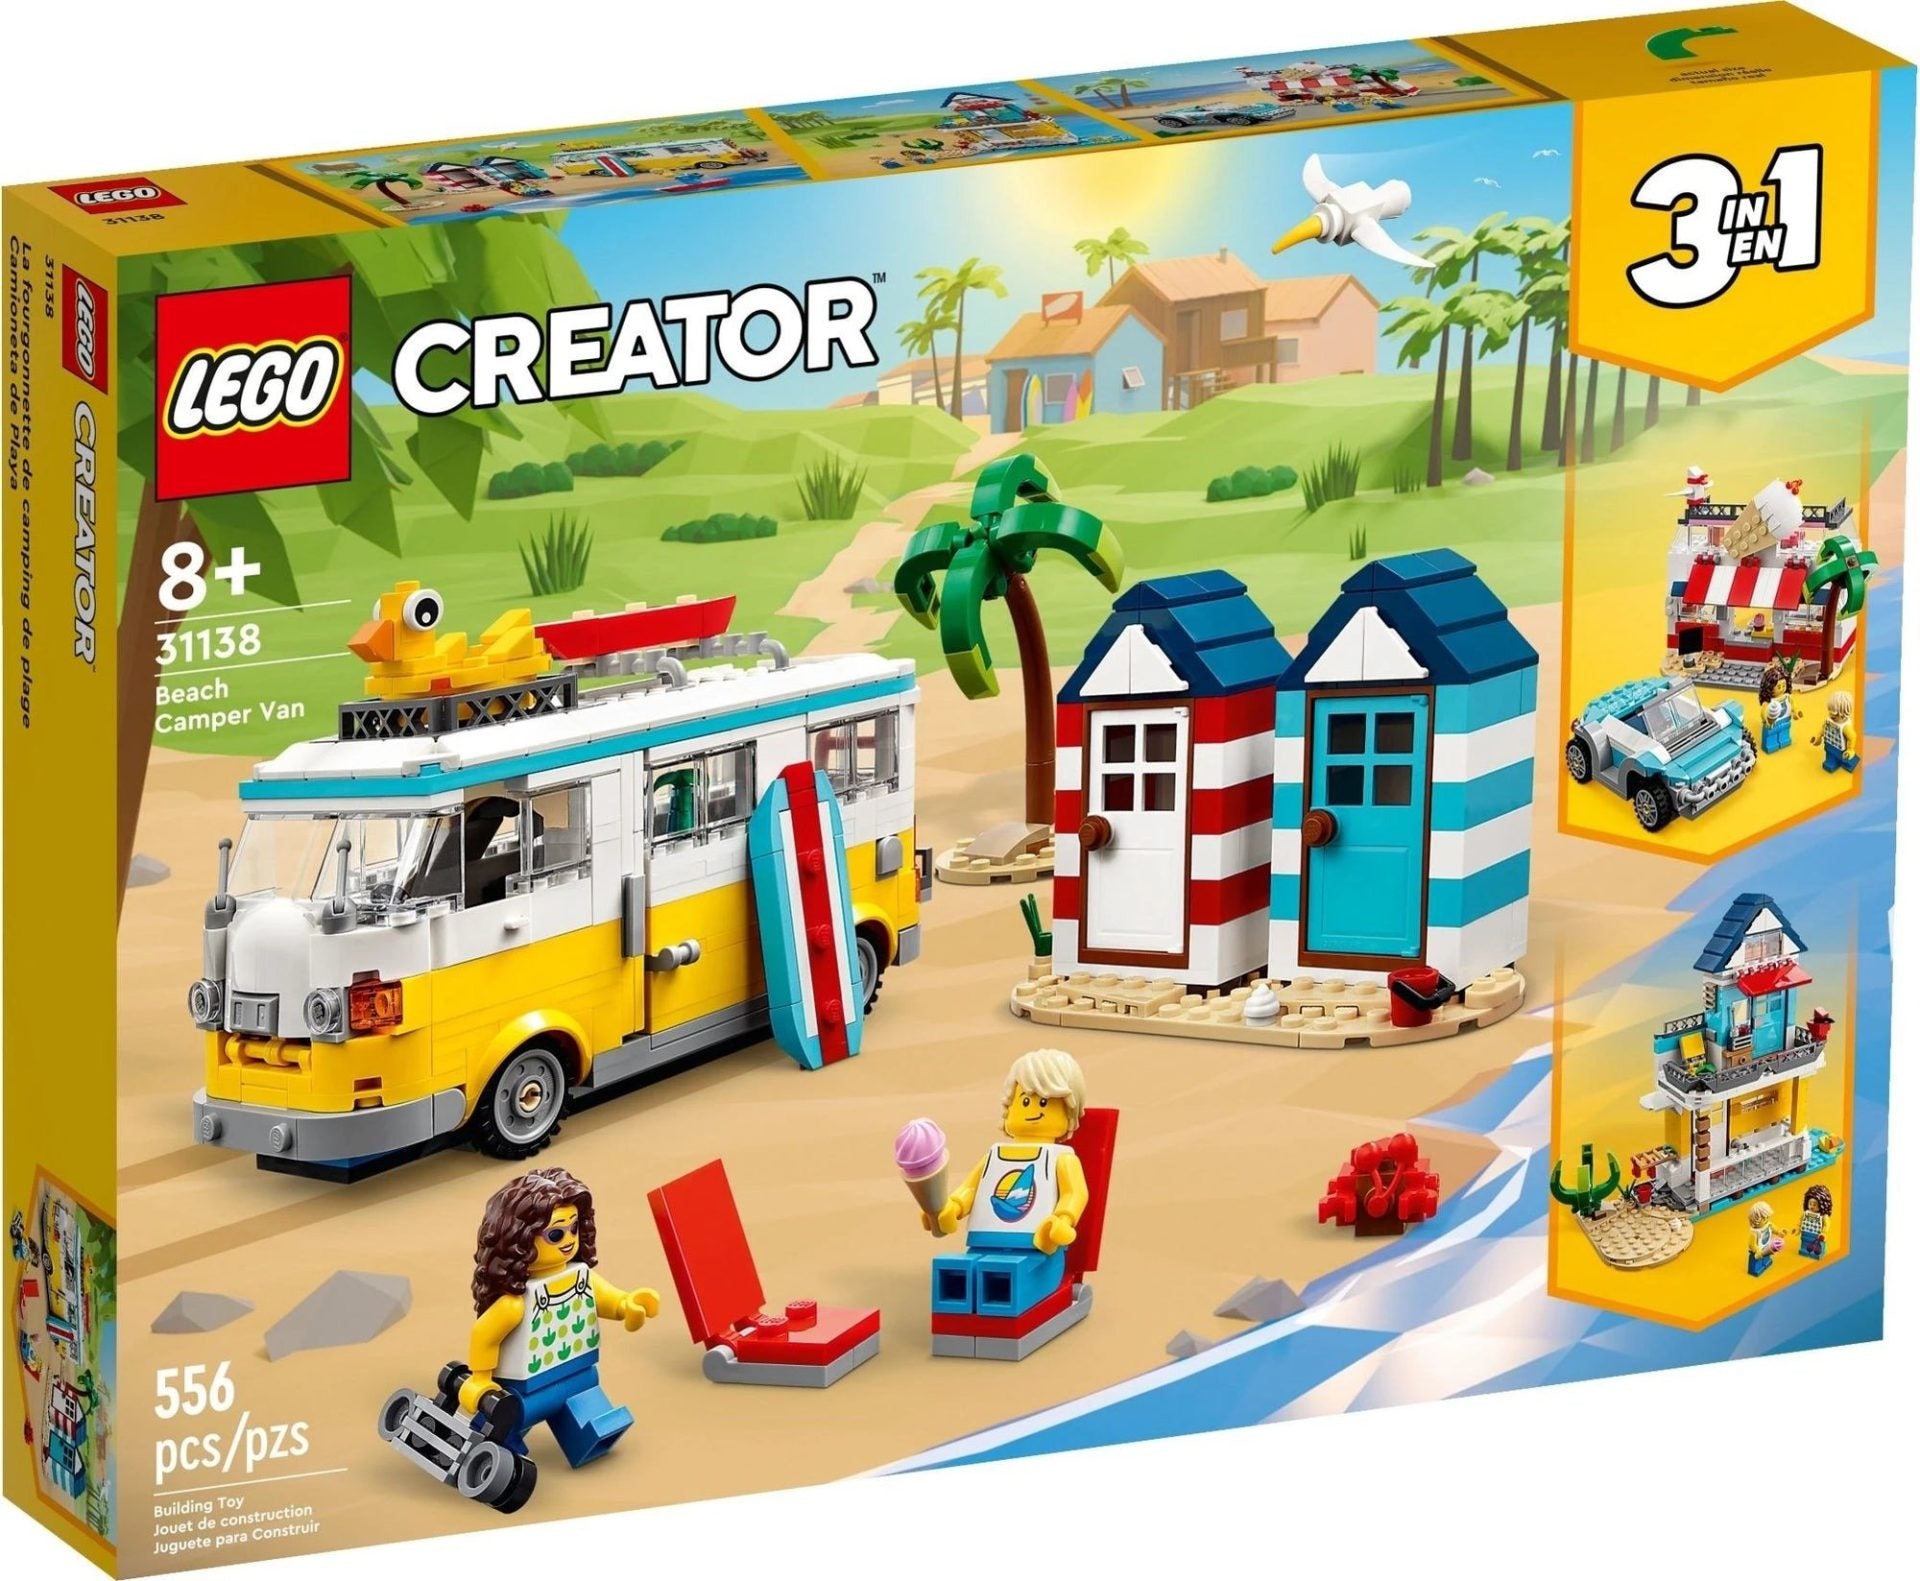 LEGO Creator - Beach Camper Van - 31138